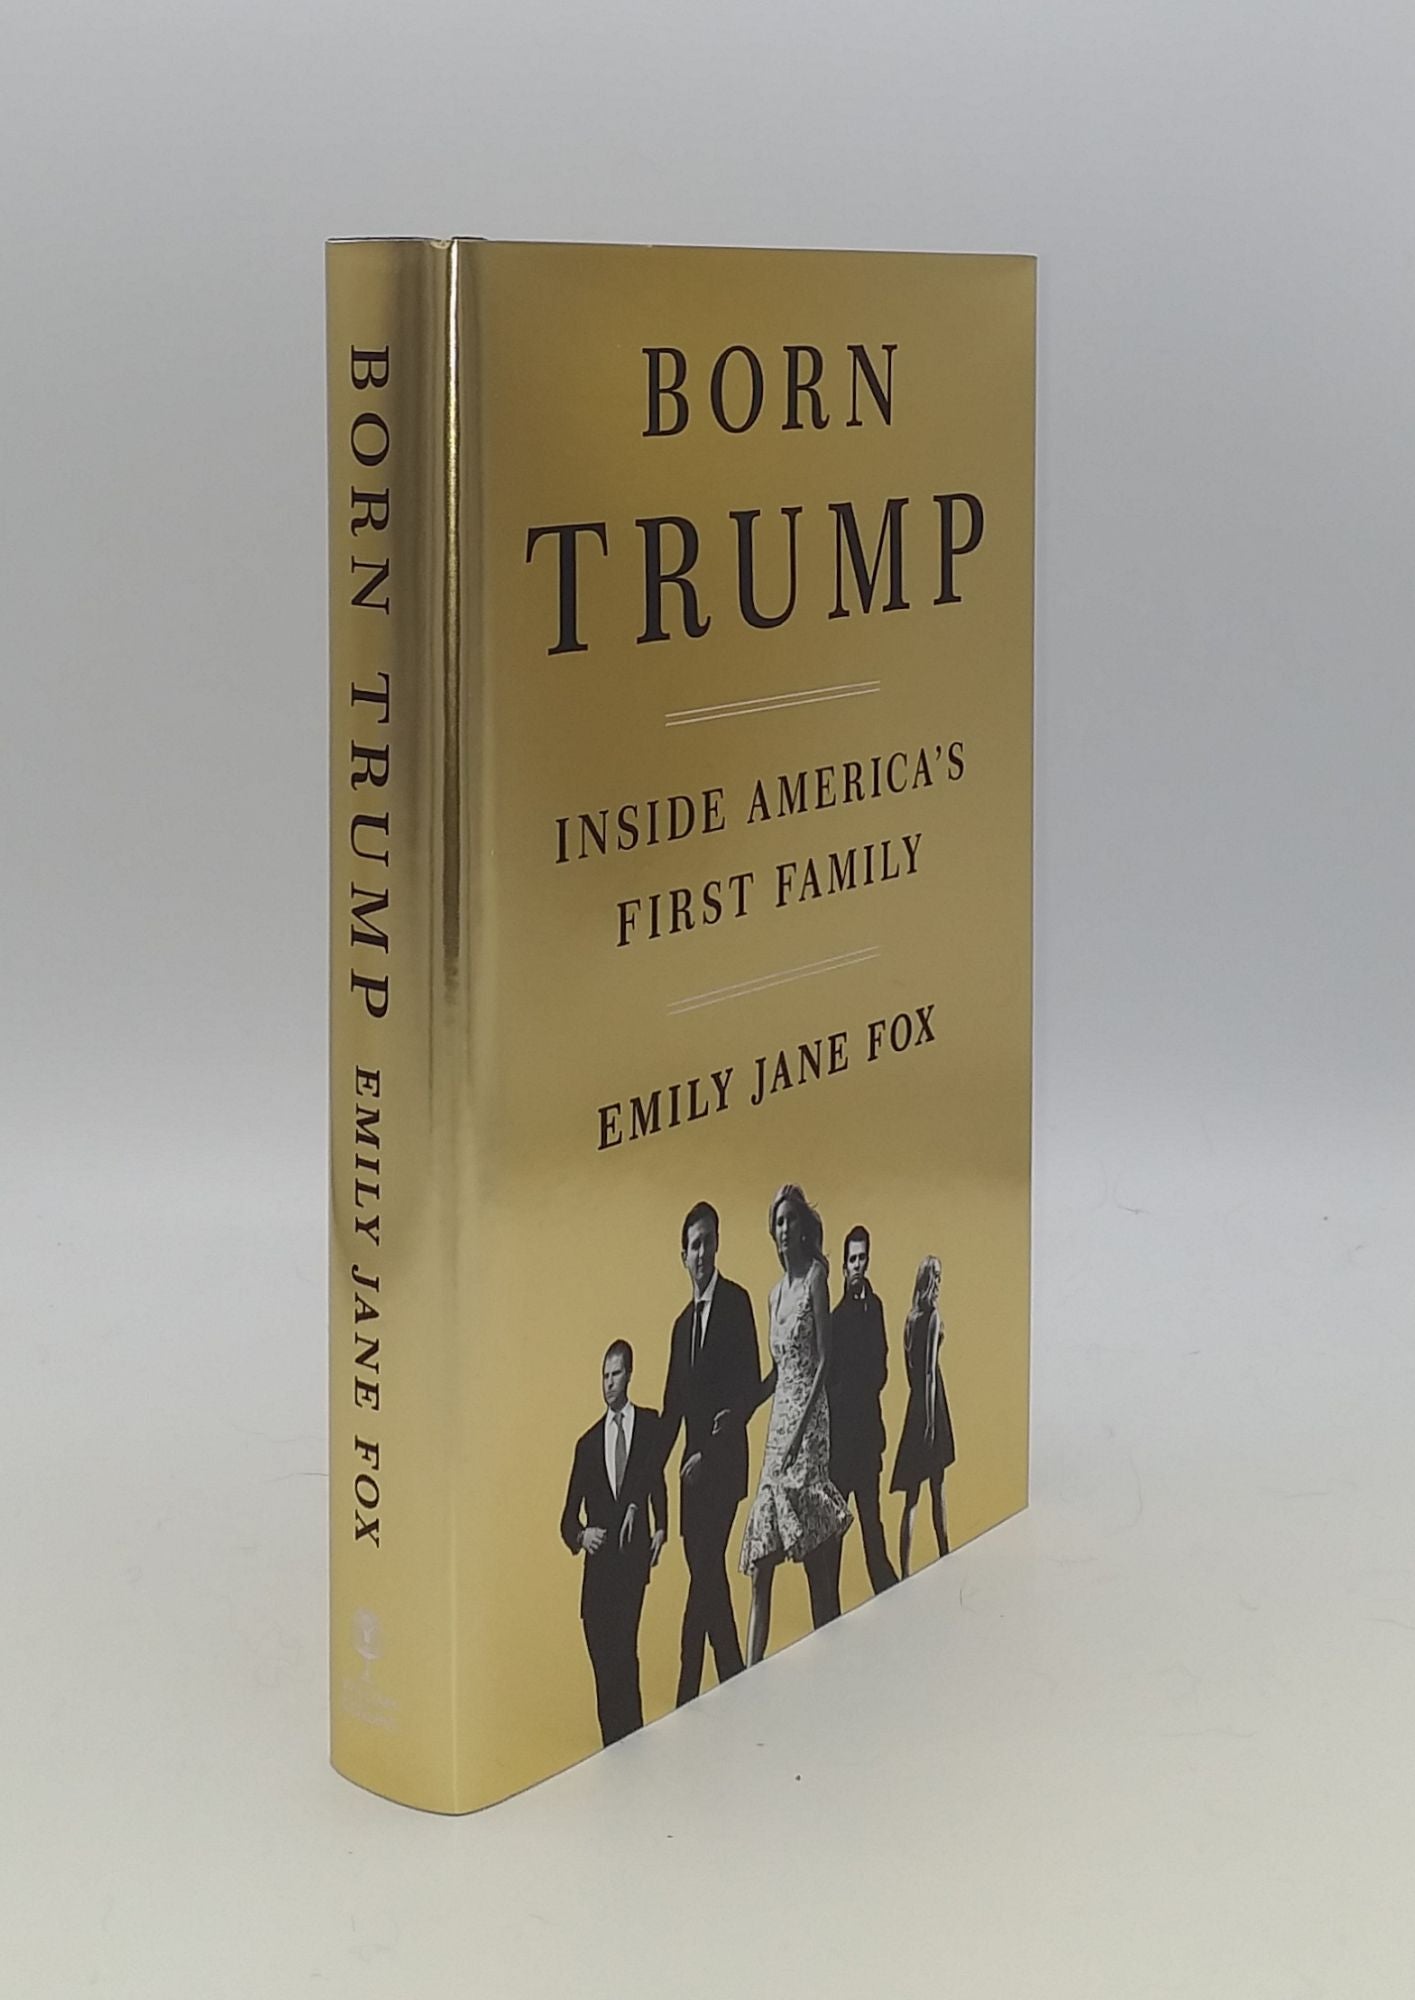 FOX Emily Jane - Born Trump Inside America's First Family